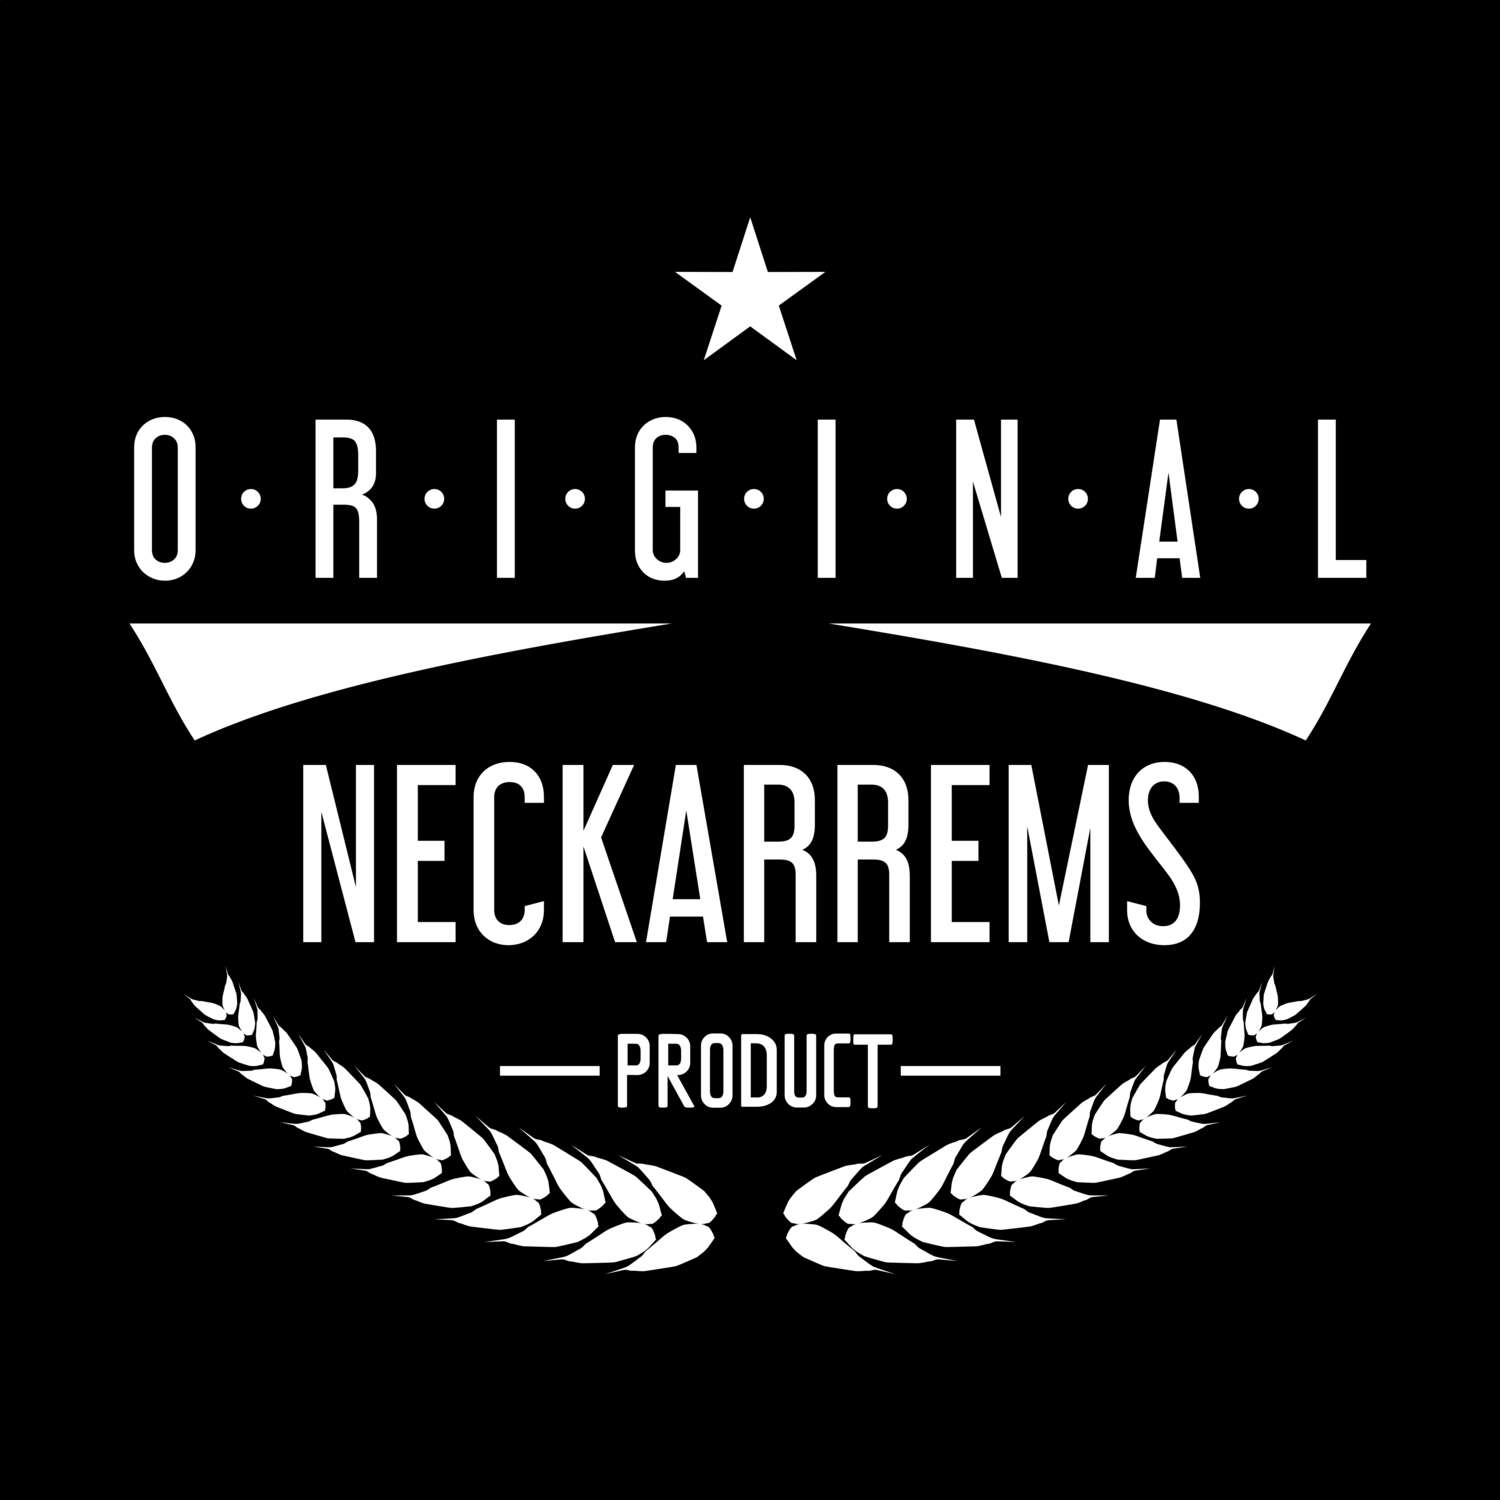 Neckarrems T-Shirt »Original Product«